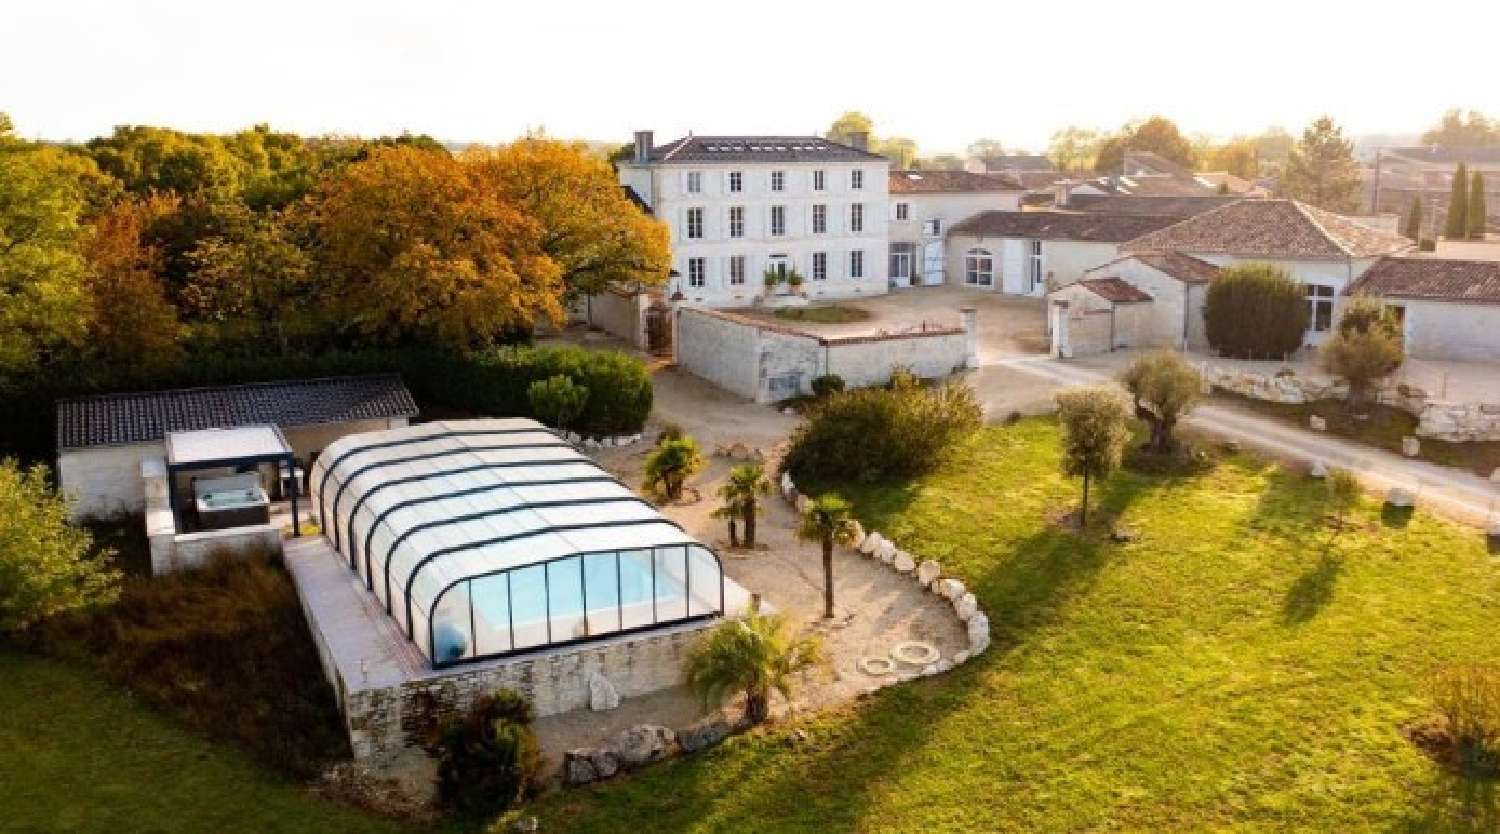  à vendre château Angoulême Charente 4